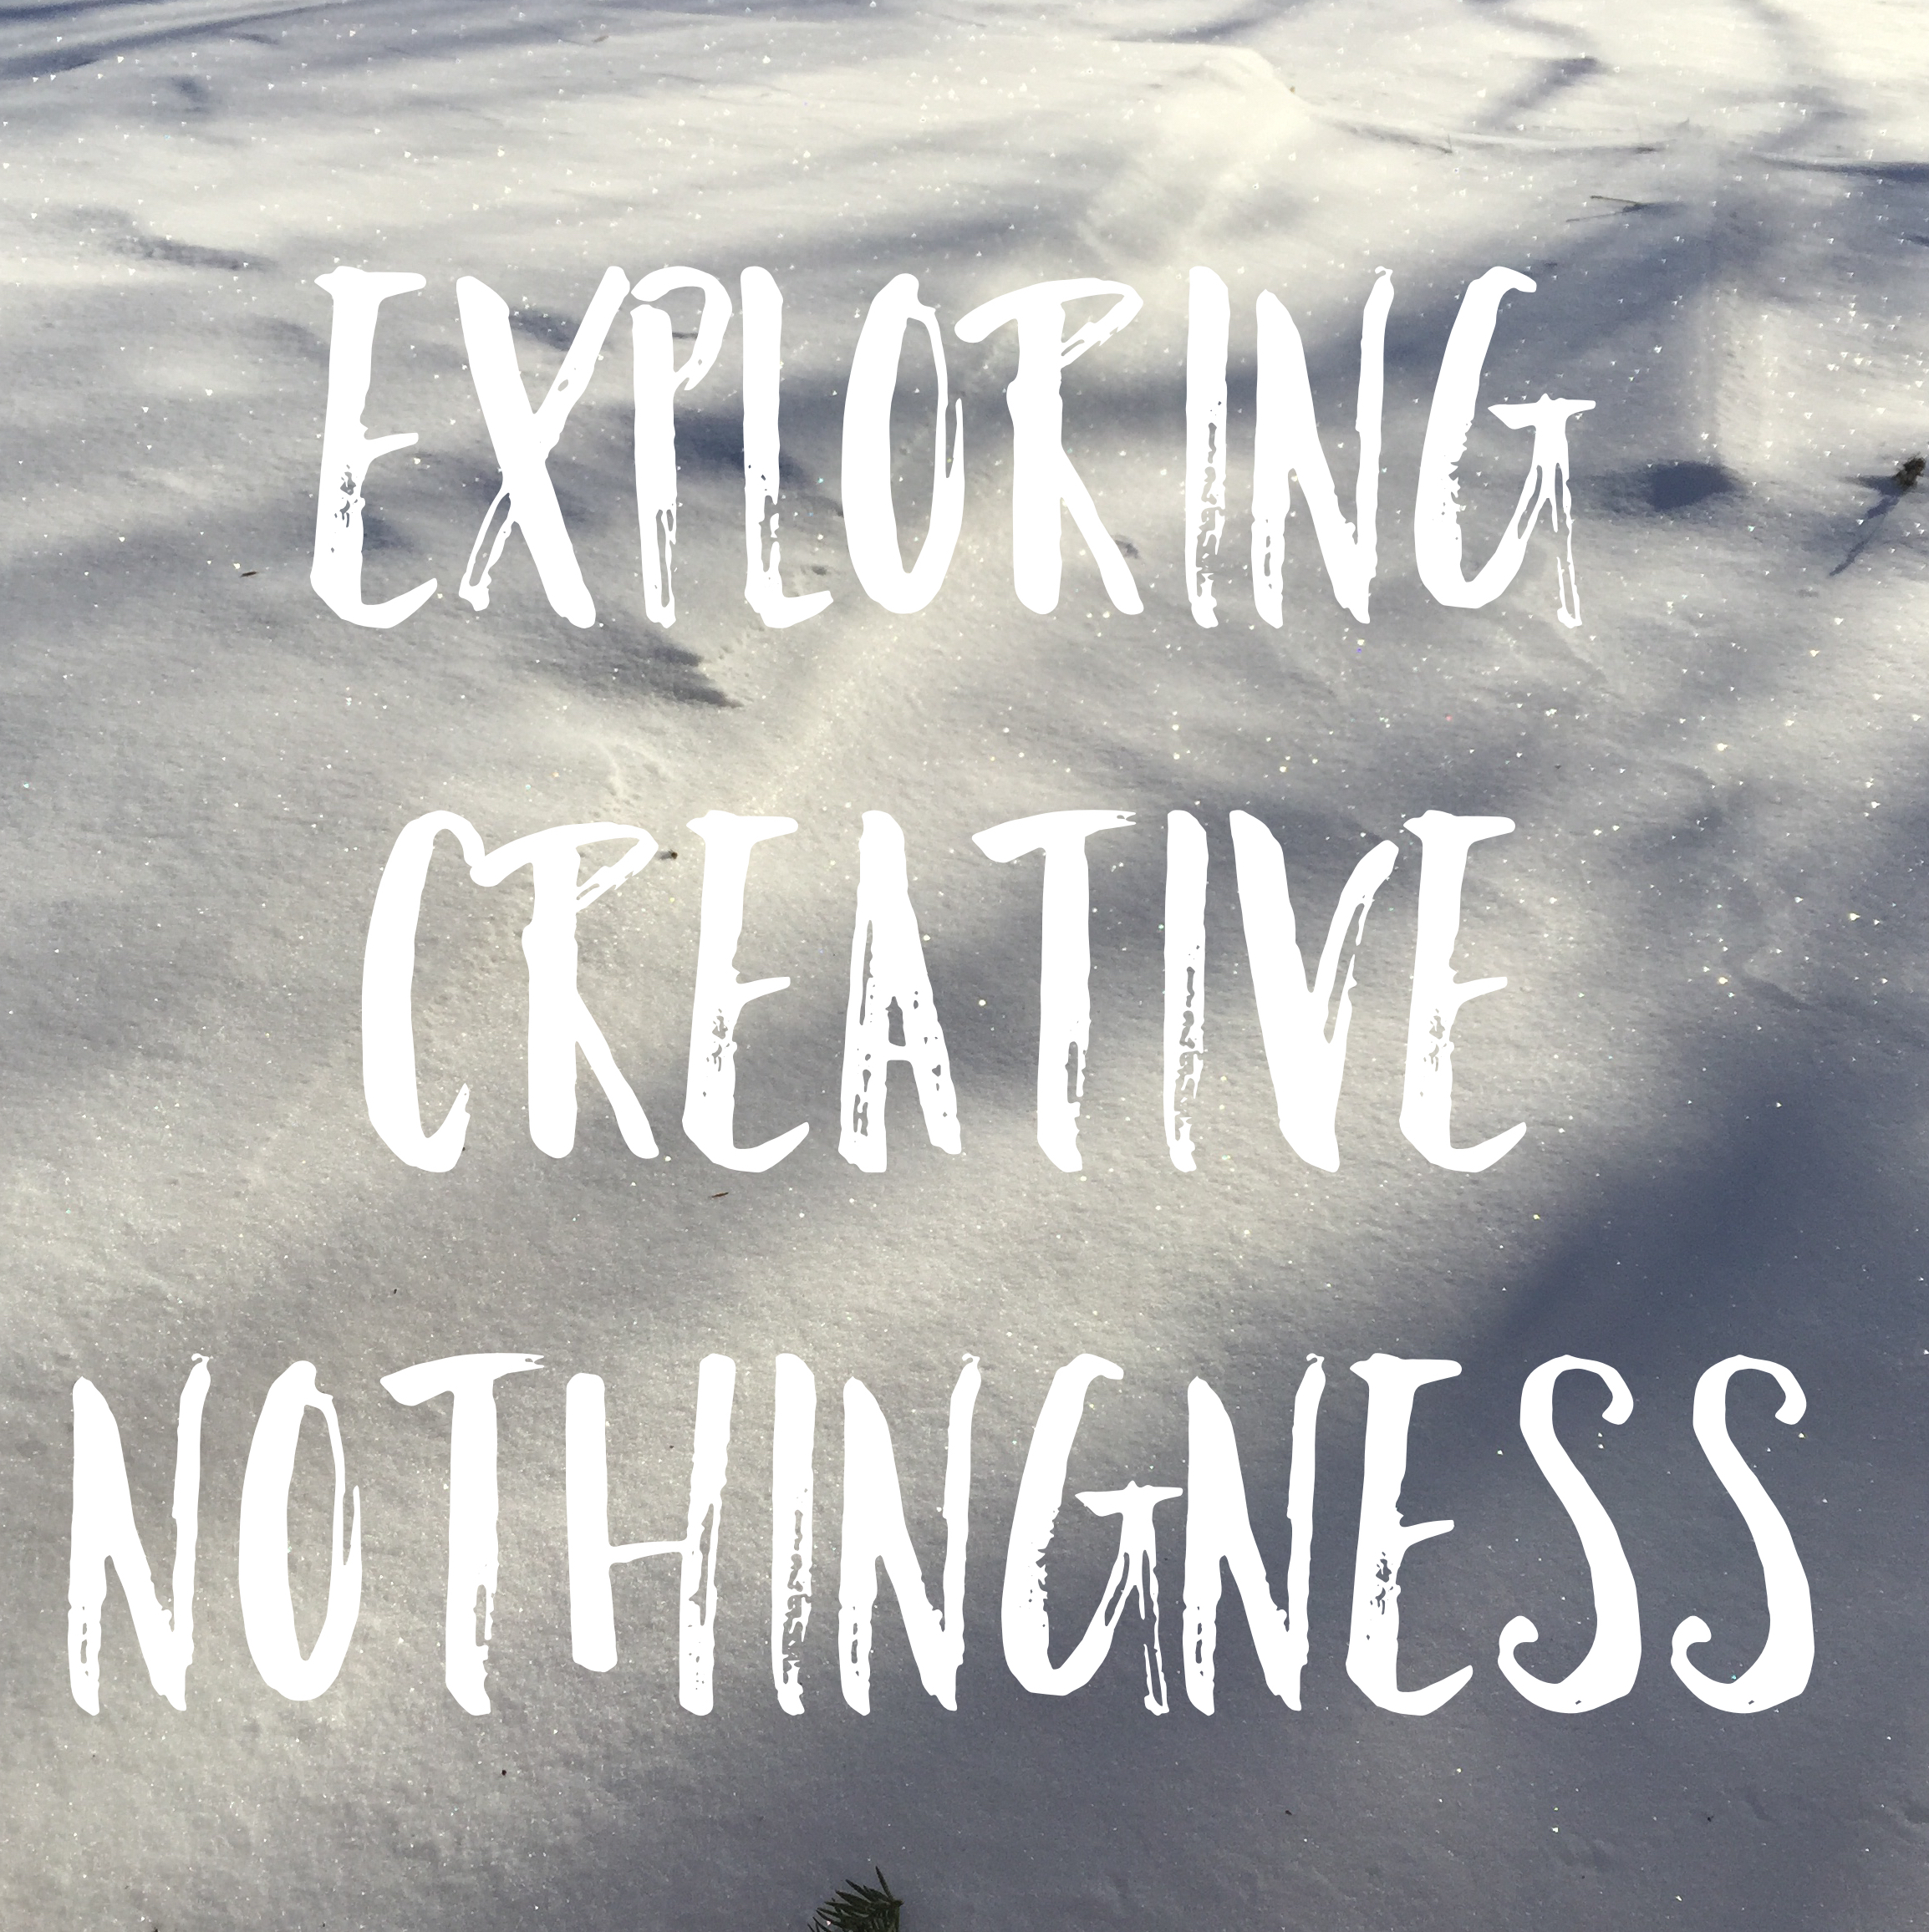 Creative Soul Reflection: Creative Nothingness